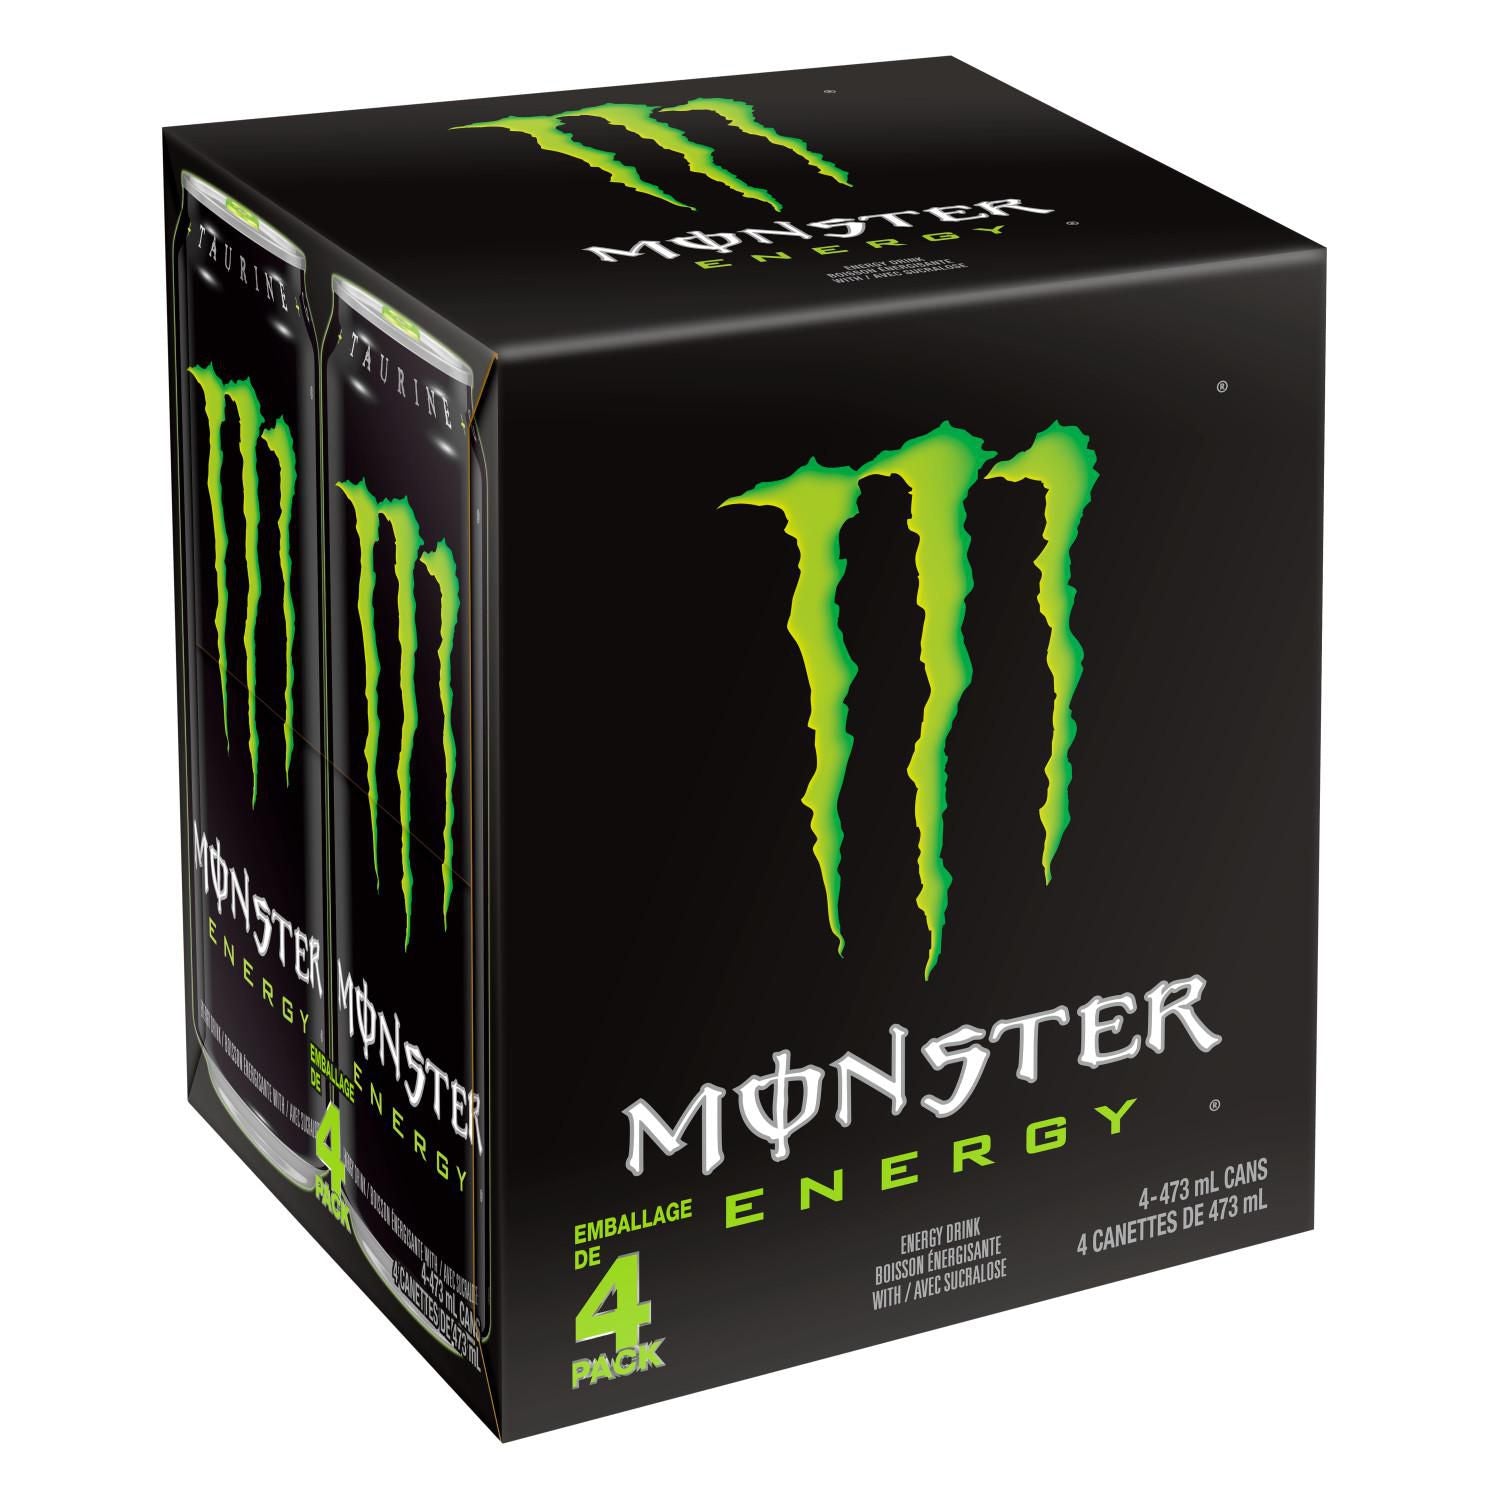 Monster Energy Can Original, Amount per serving / 6x473ml, SNS Health, Energy Drink